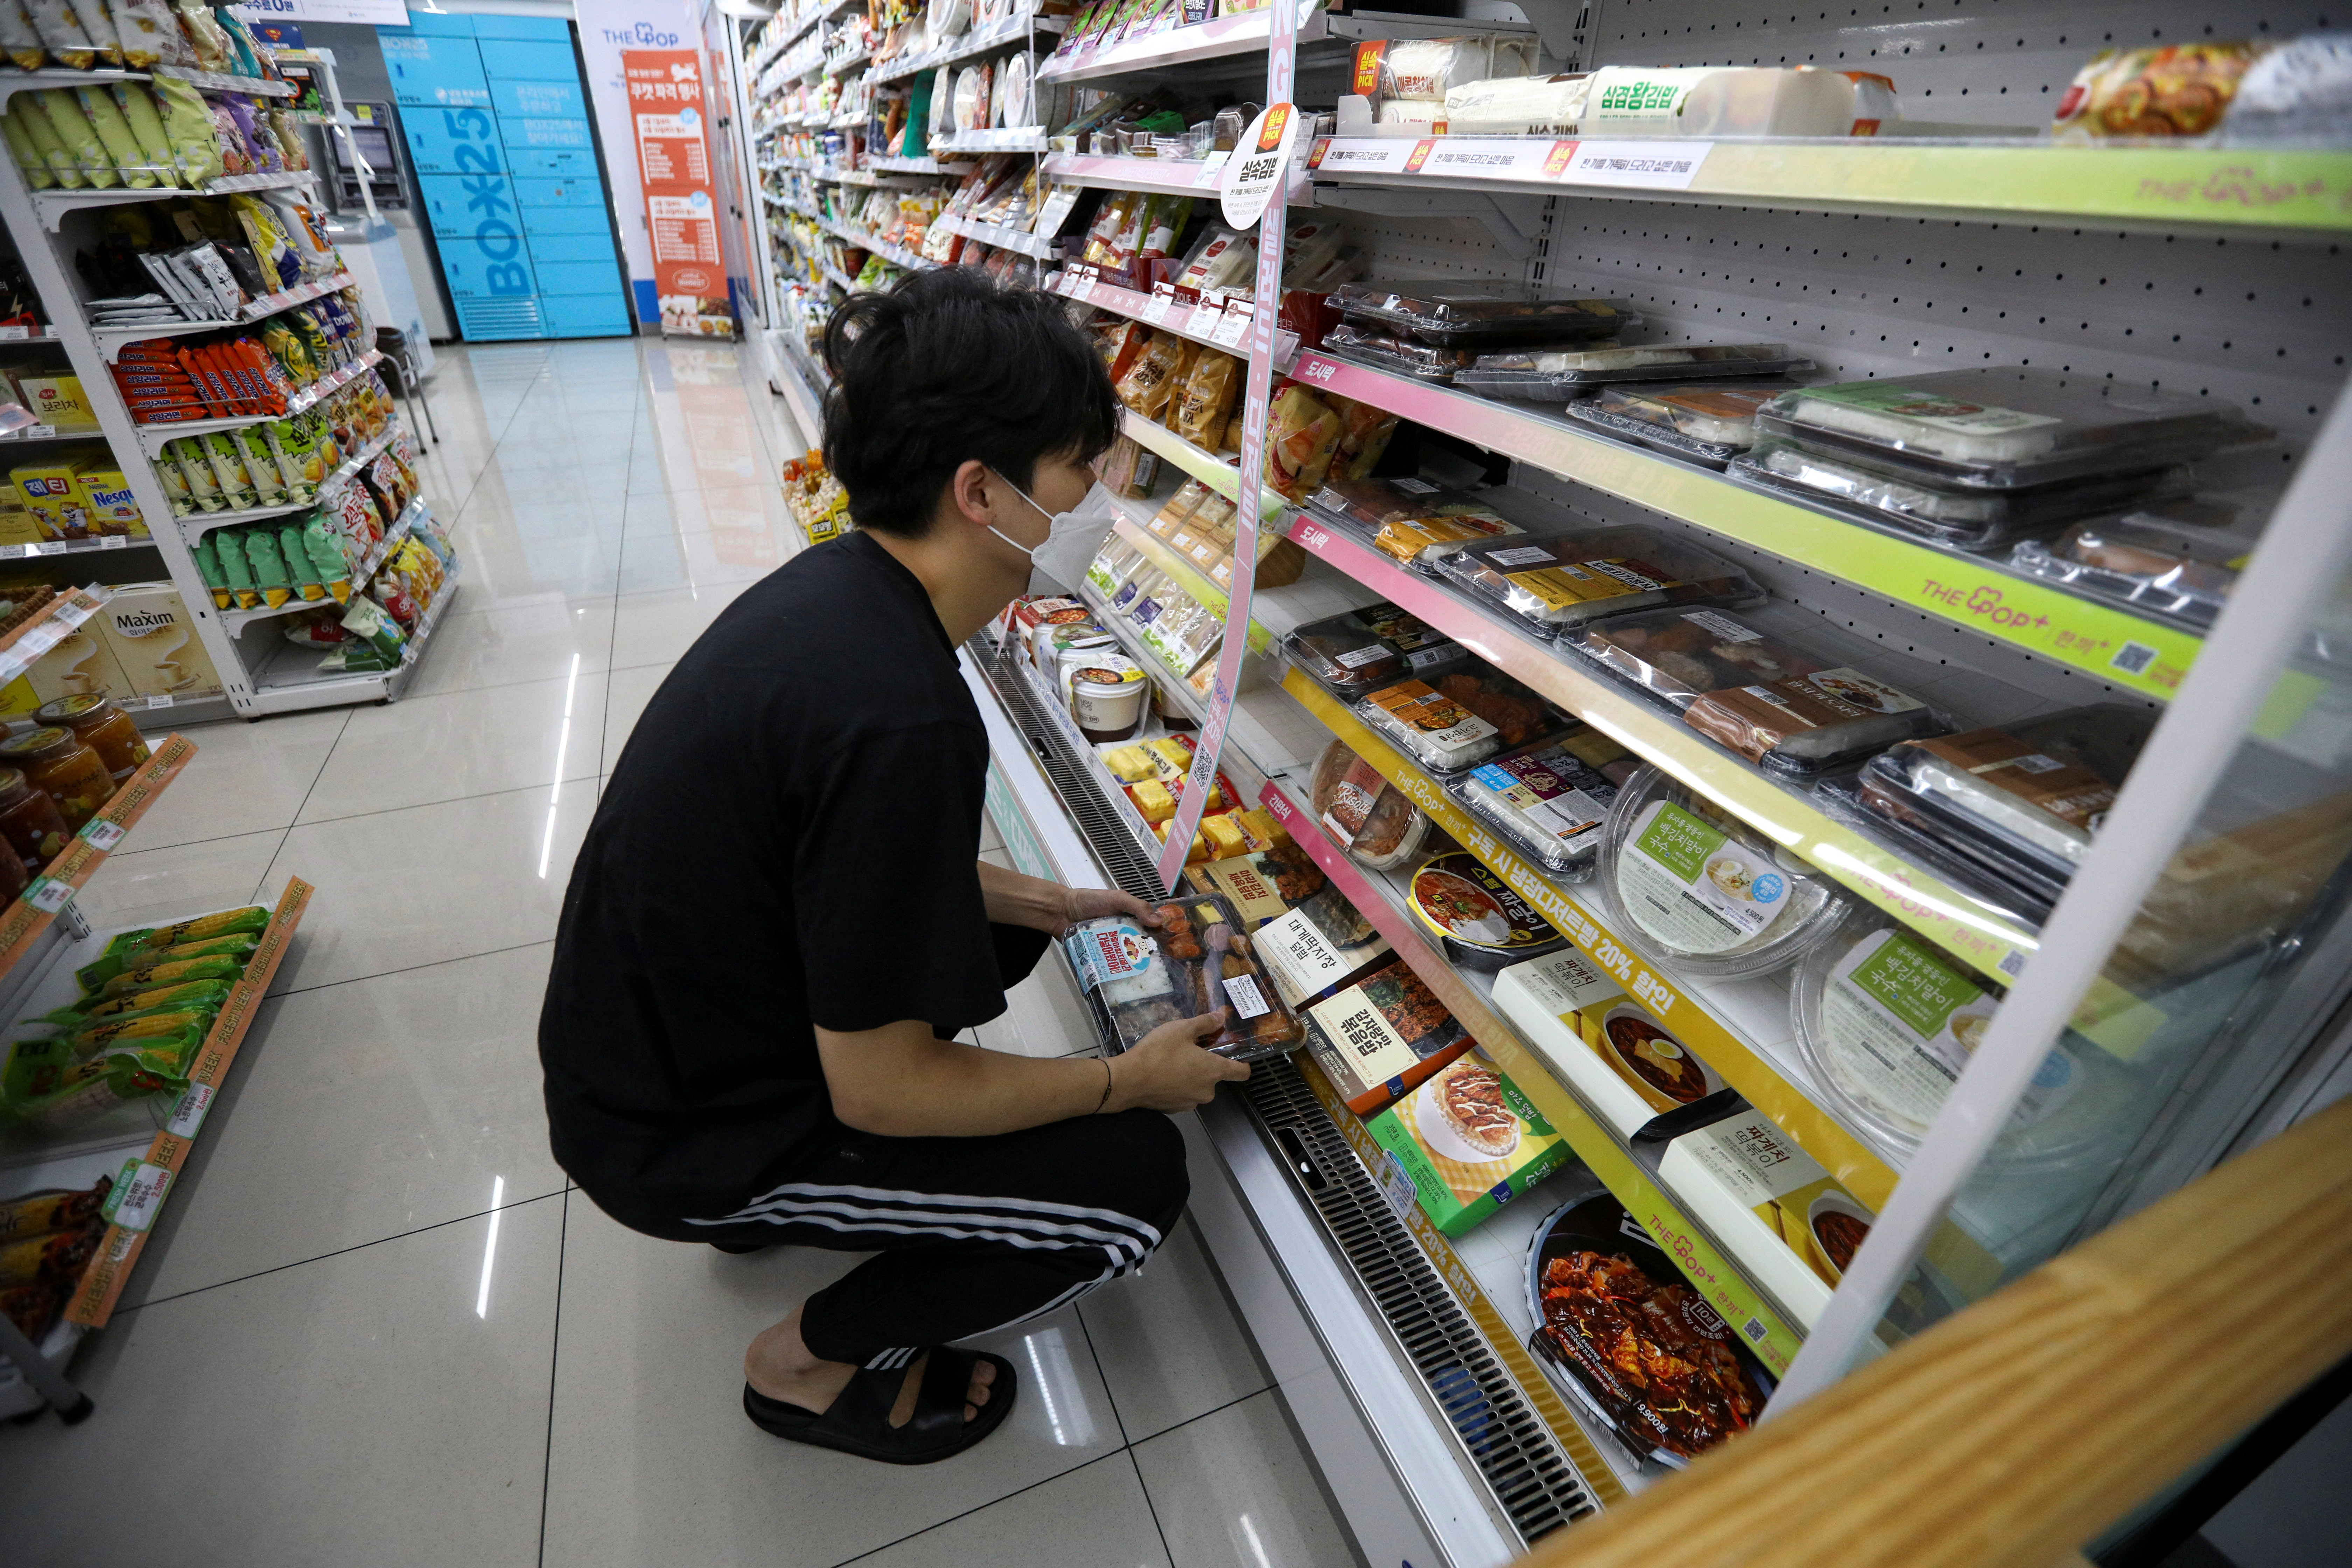 Mandatory holidays for big-box retailers losing traction in Korea